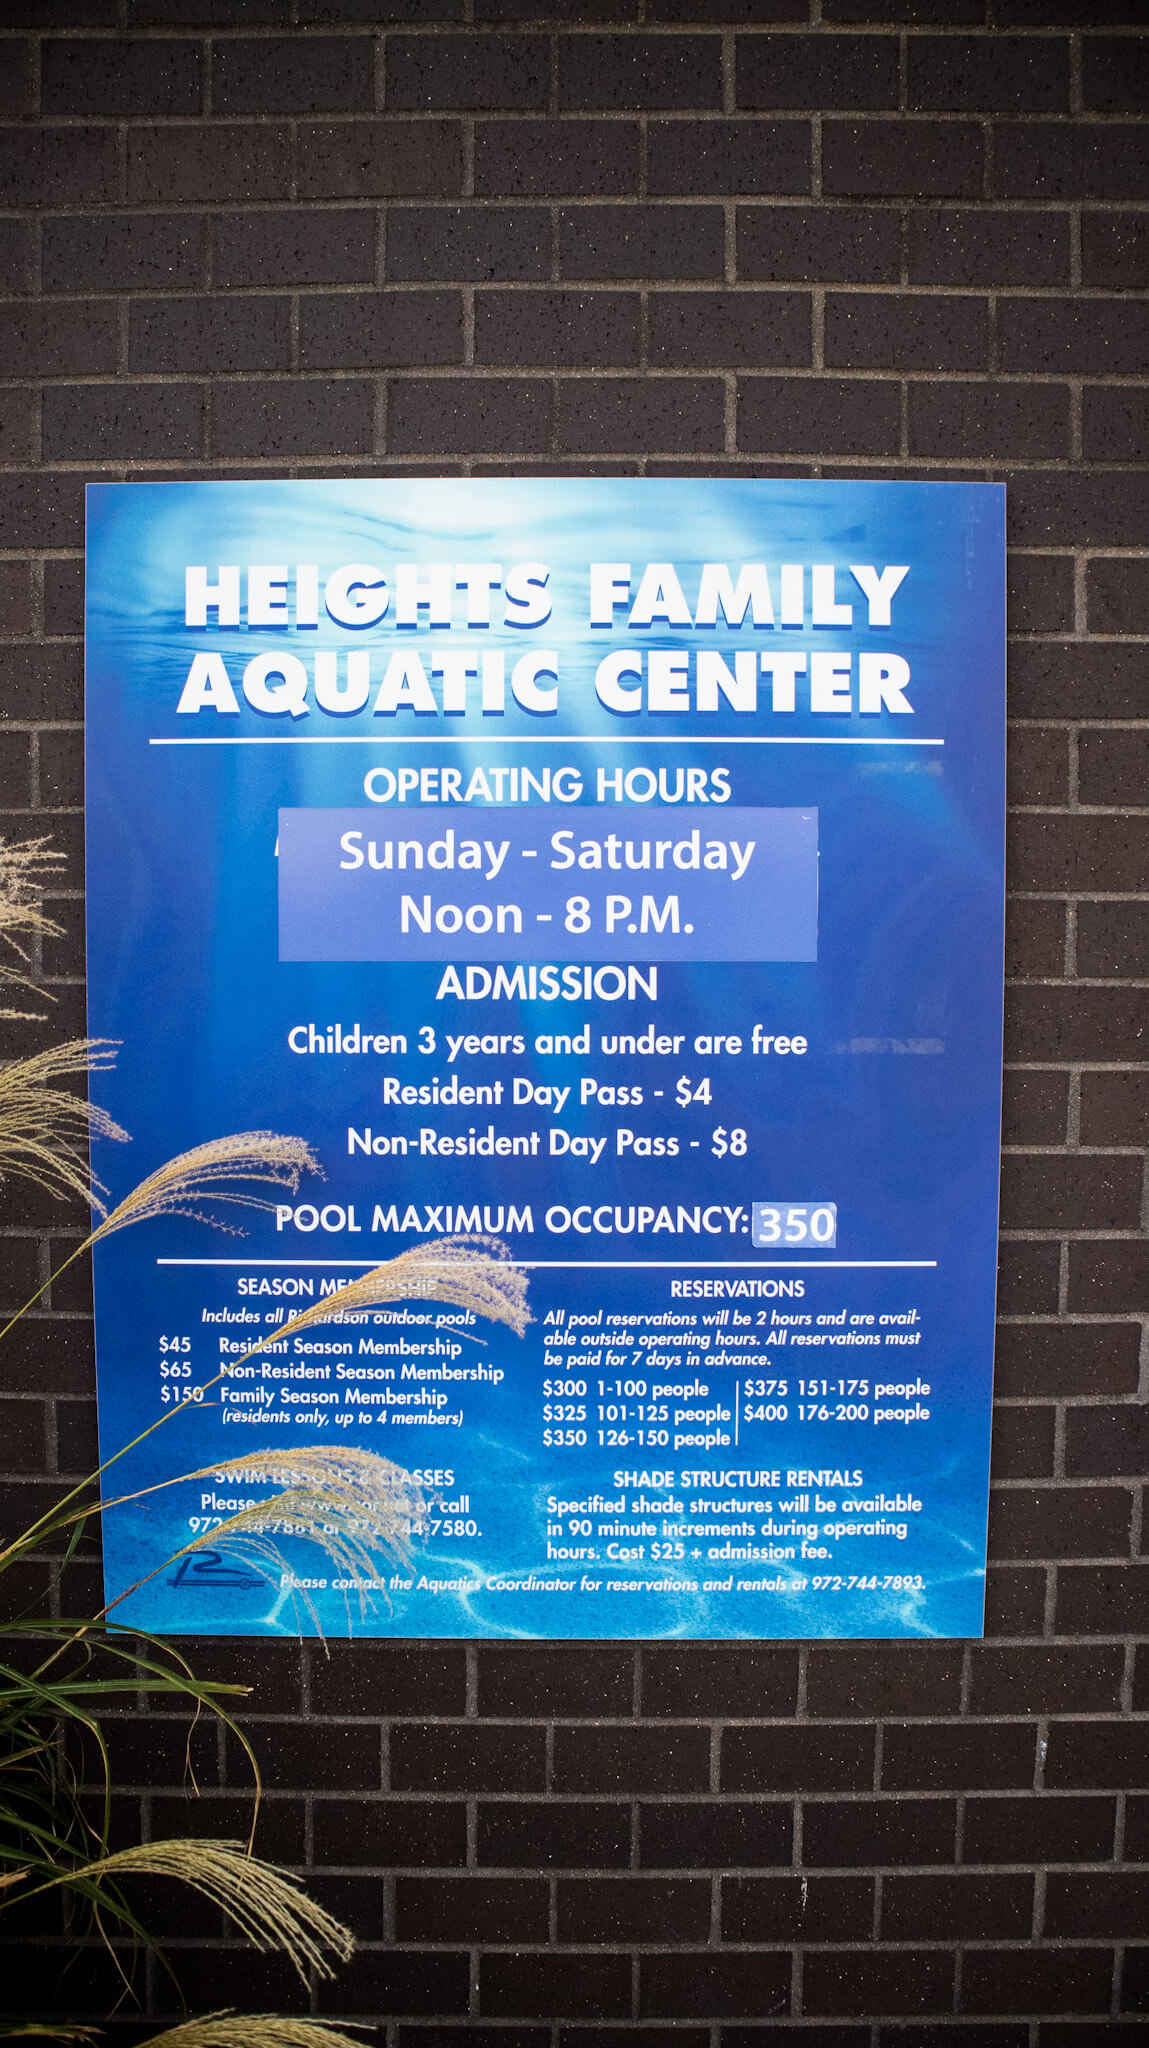 Heights Family Aquatic Center